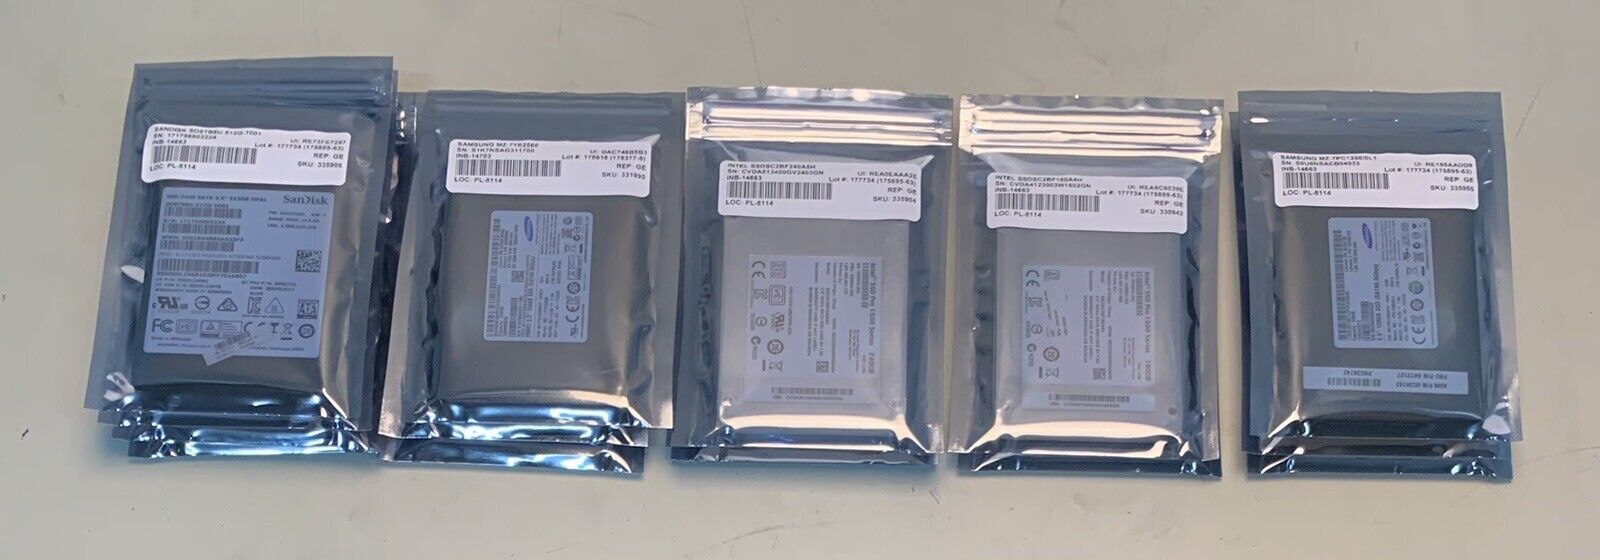 Lot of 15) Variety of SSD's ... 4x 512, 3x 256, 3x 240, 2x 180, 3x 128 GB